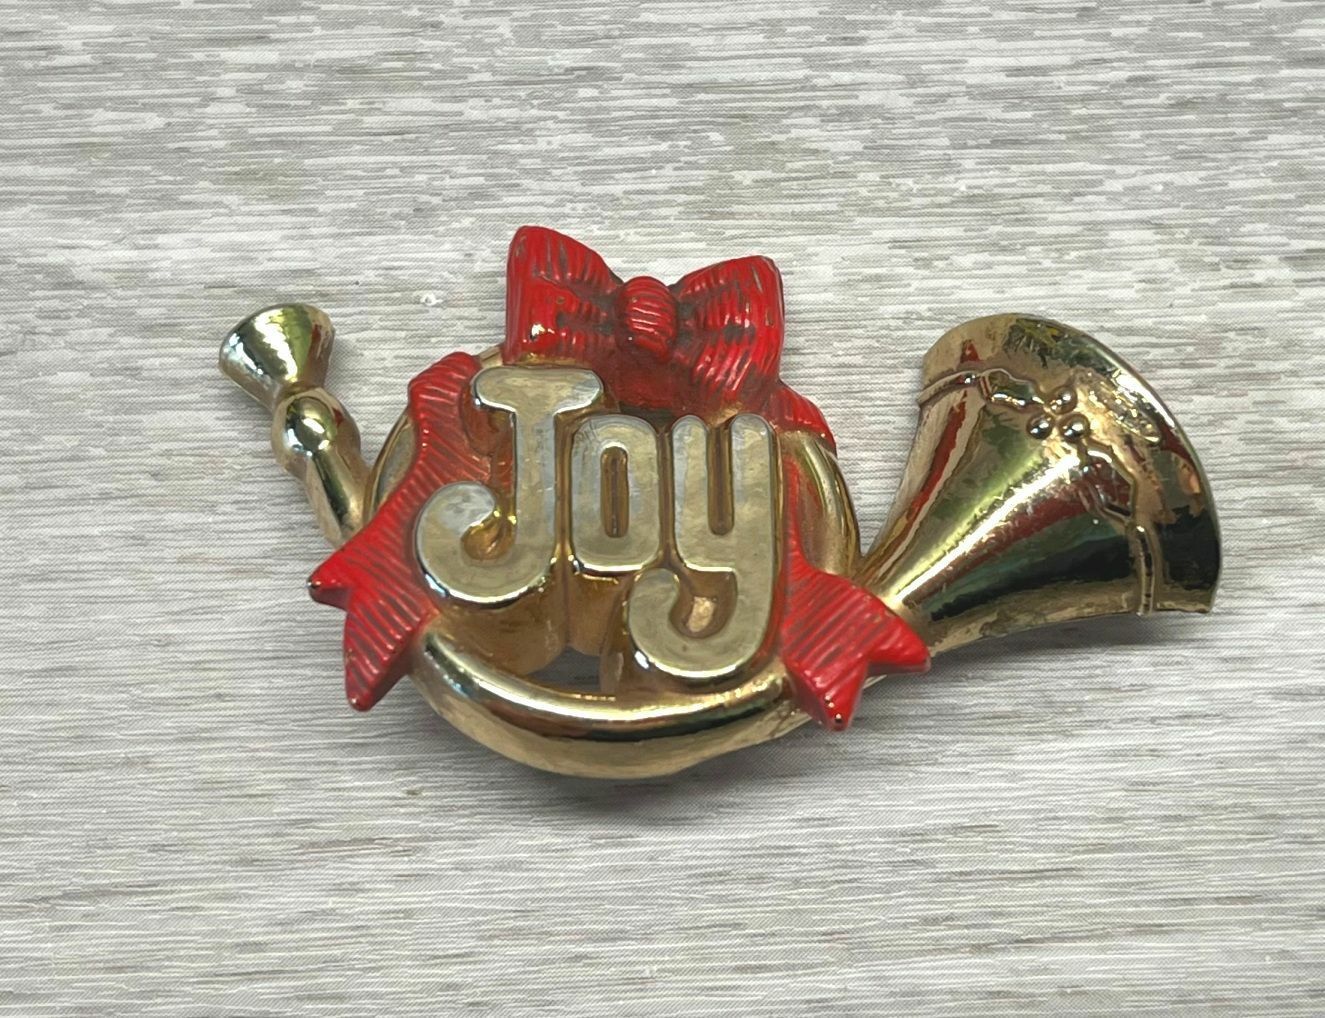 Hallmark Joy French Horn Brooch Pin Vintage 1983 Christmas Gold Tone 2 In Across - $11.95